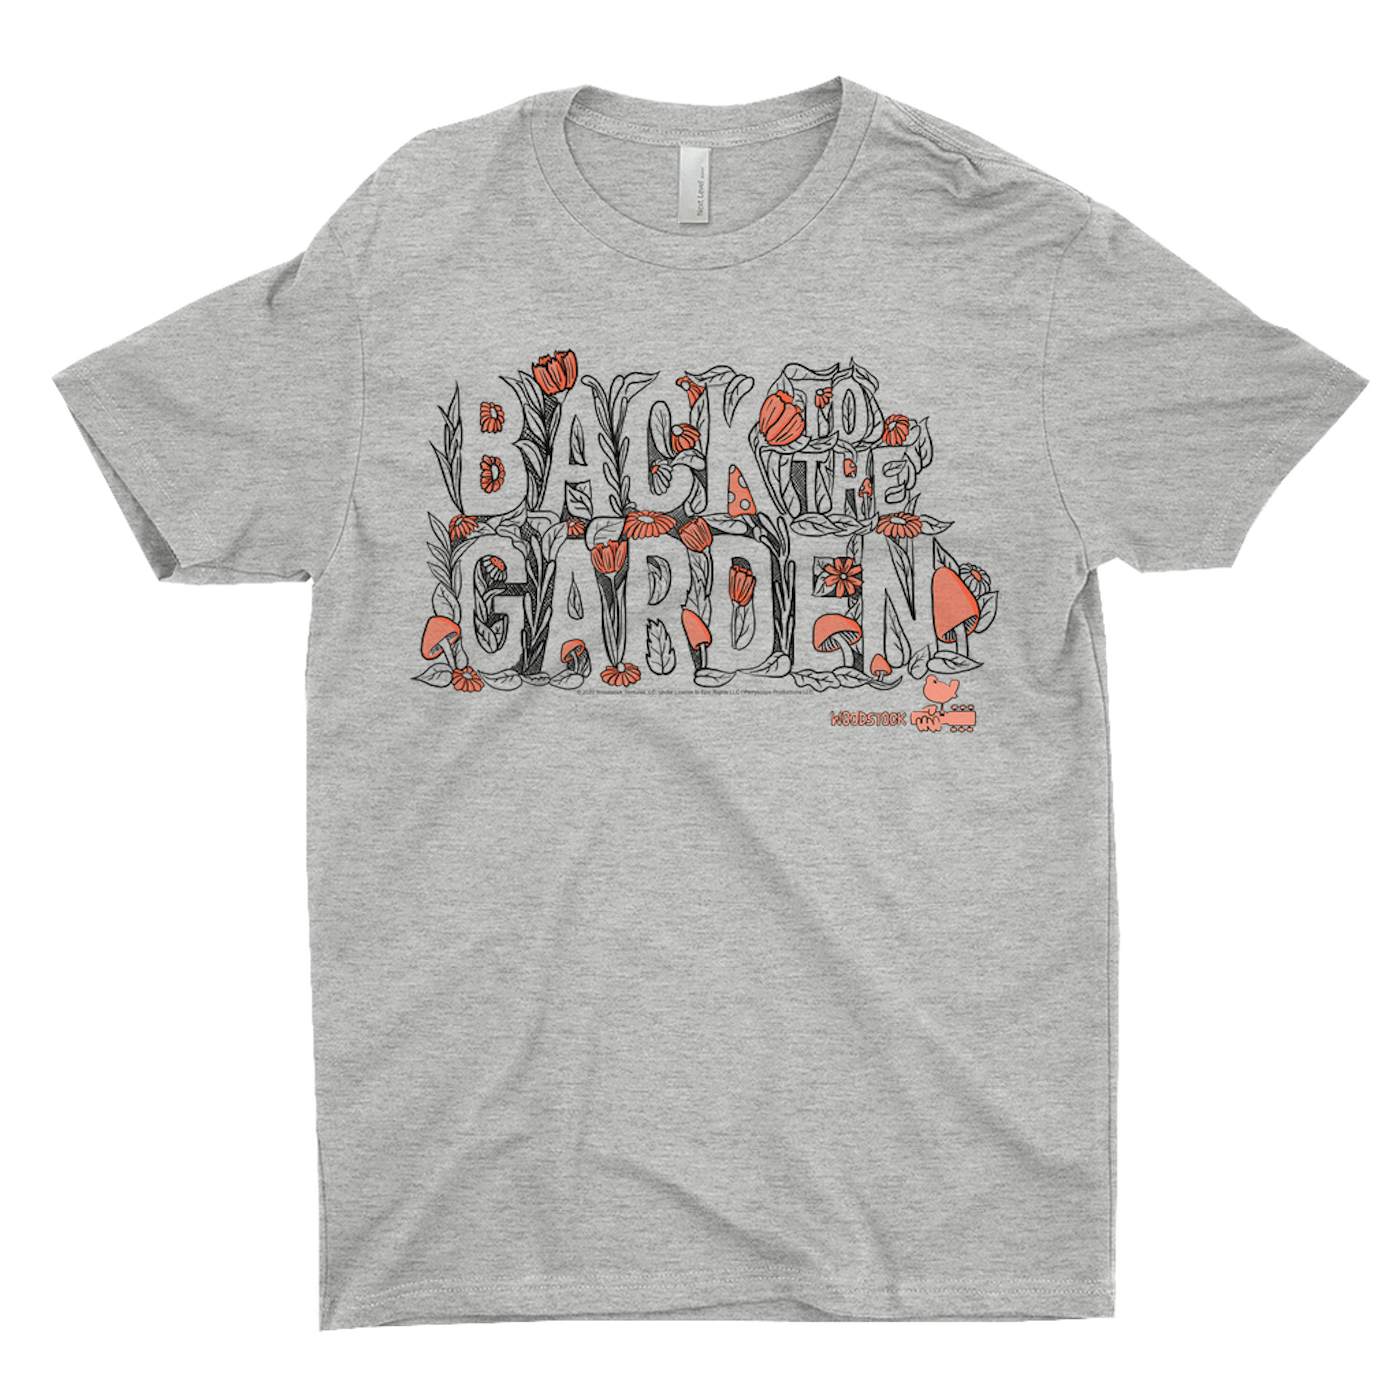 Woodstock T-Shirt | Back To The Garden Woodstock Shirt